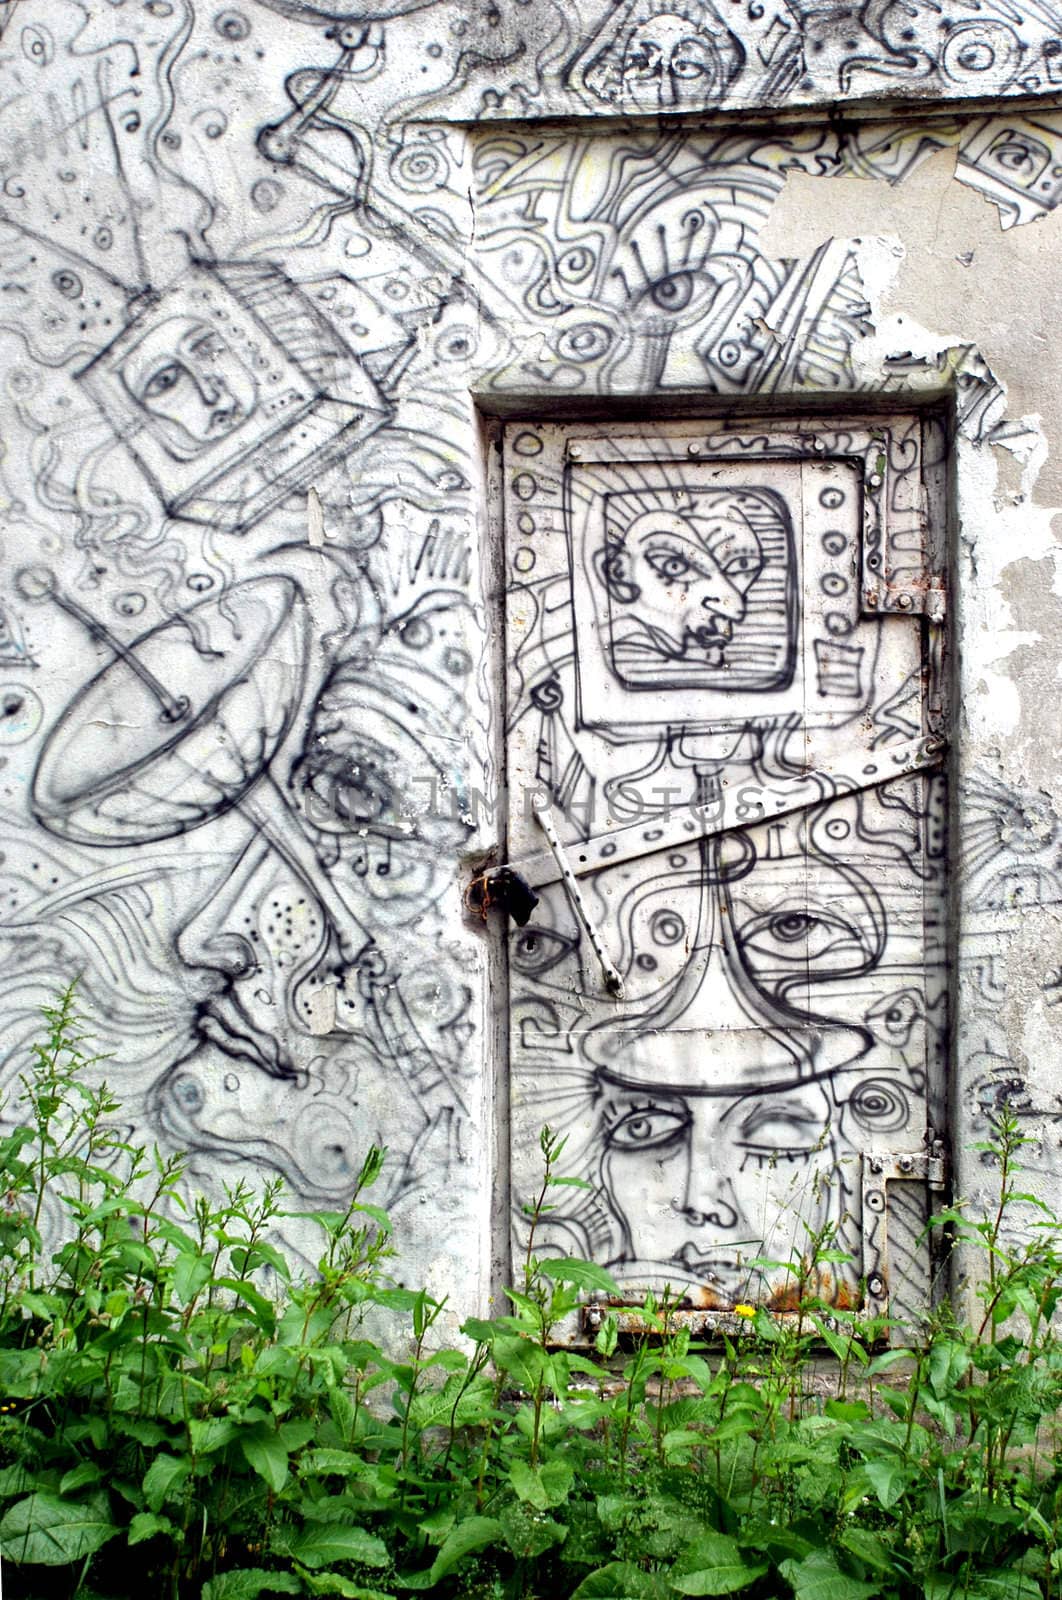 Graffiti on doors and wall by sauletas